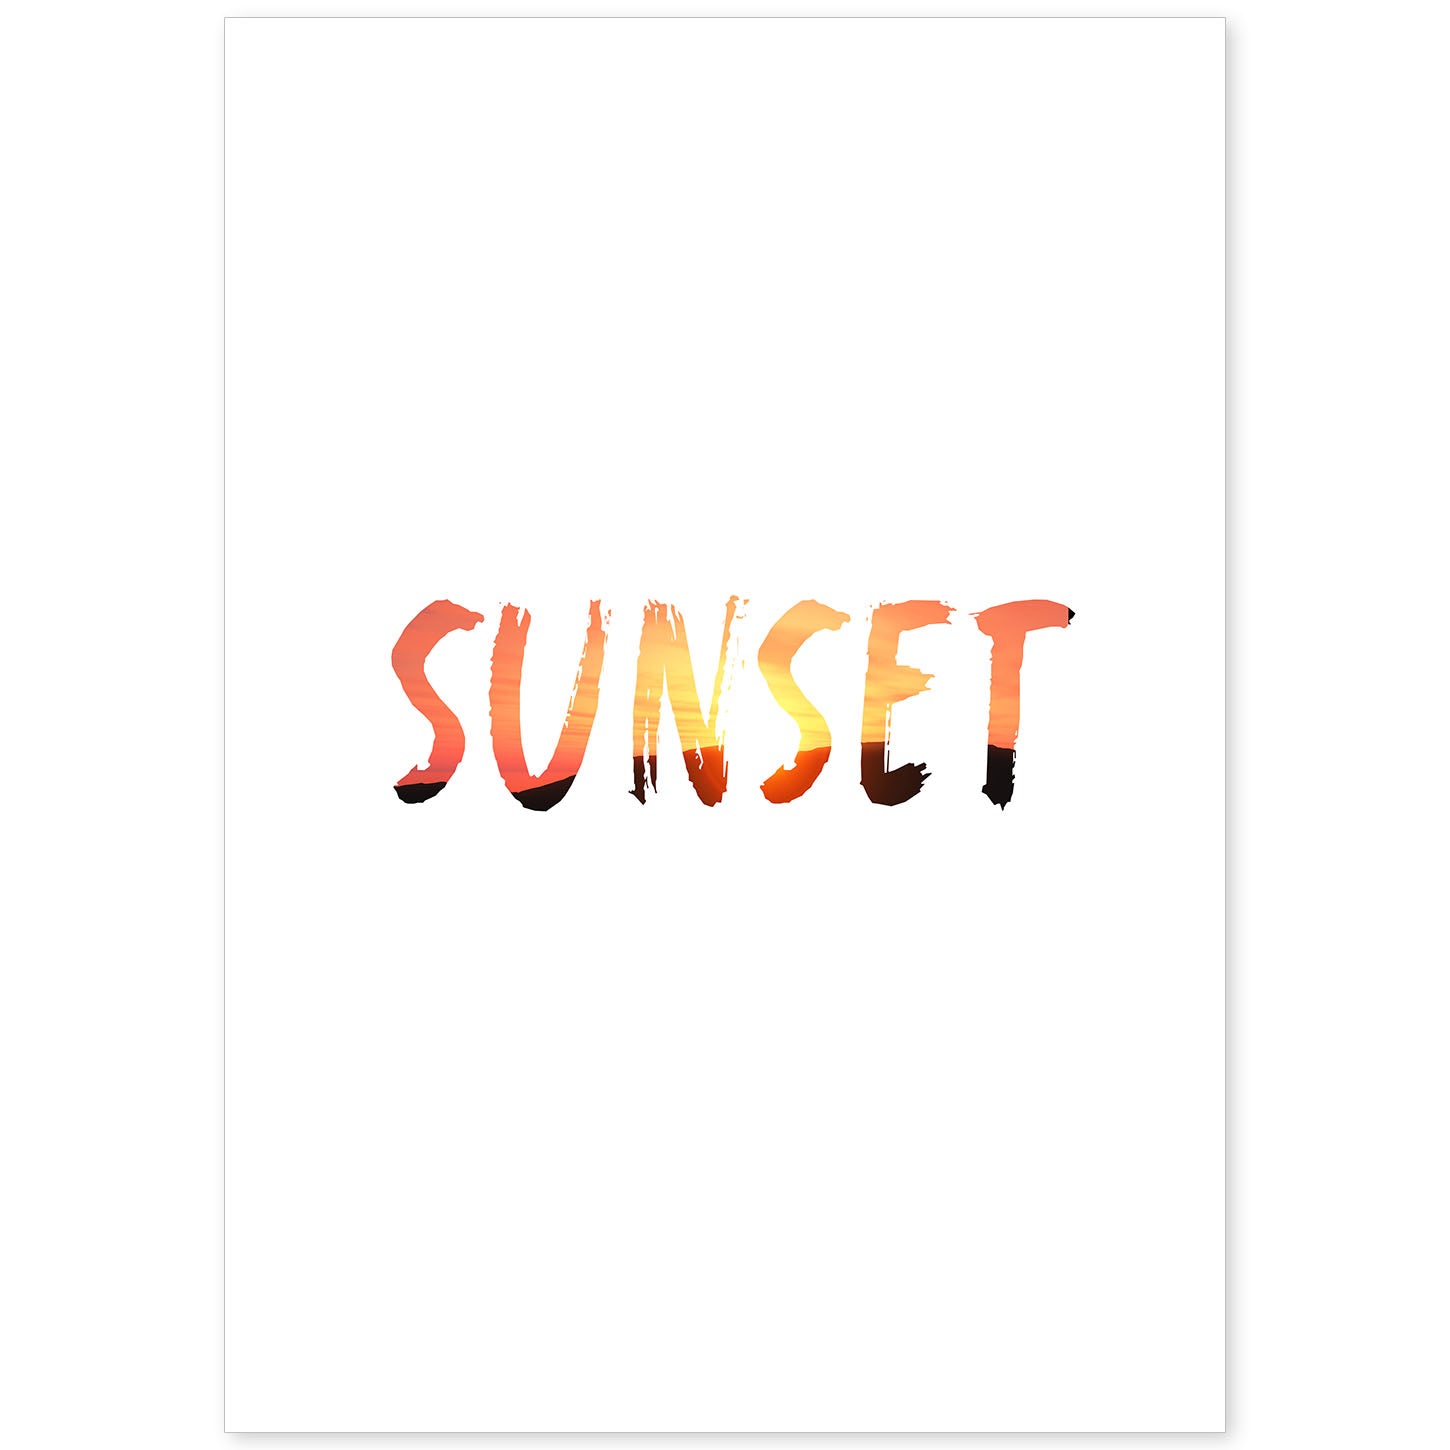 Lamina artistica decorativa con ilustración de sunset estilo Mensaje inspiracional-Artwork-Nacnic-A4-Sin marco-Nacnic Estudio SL